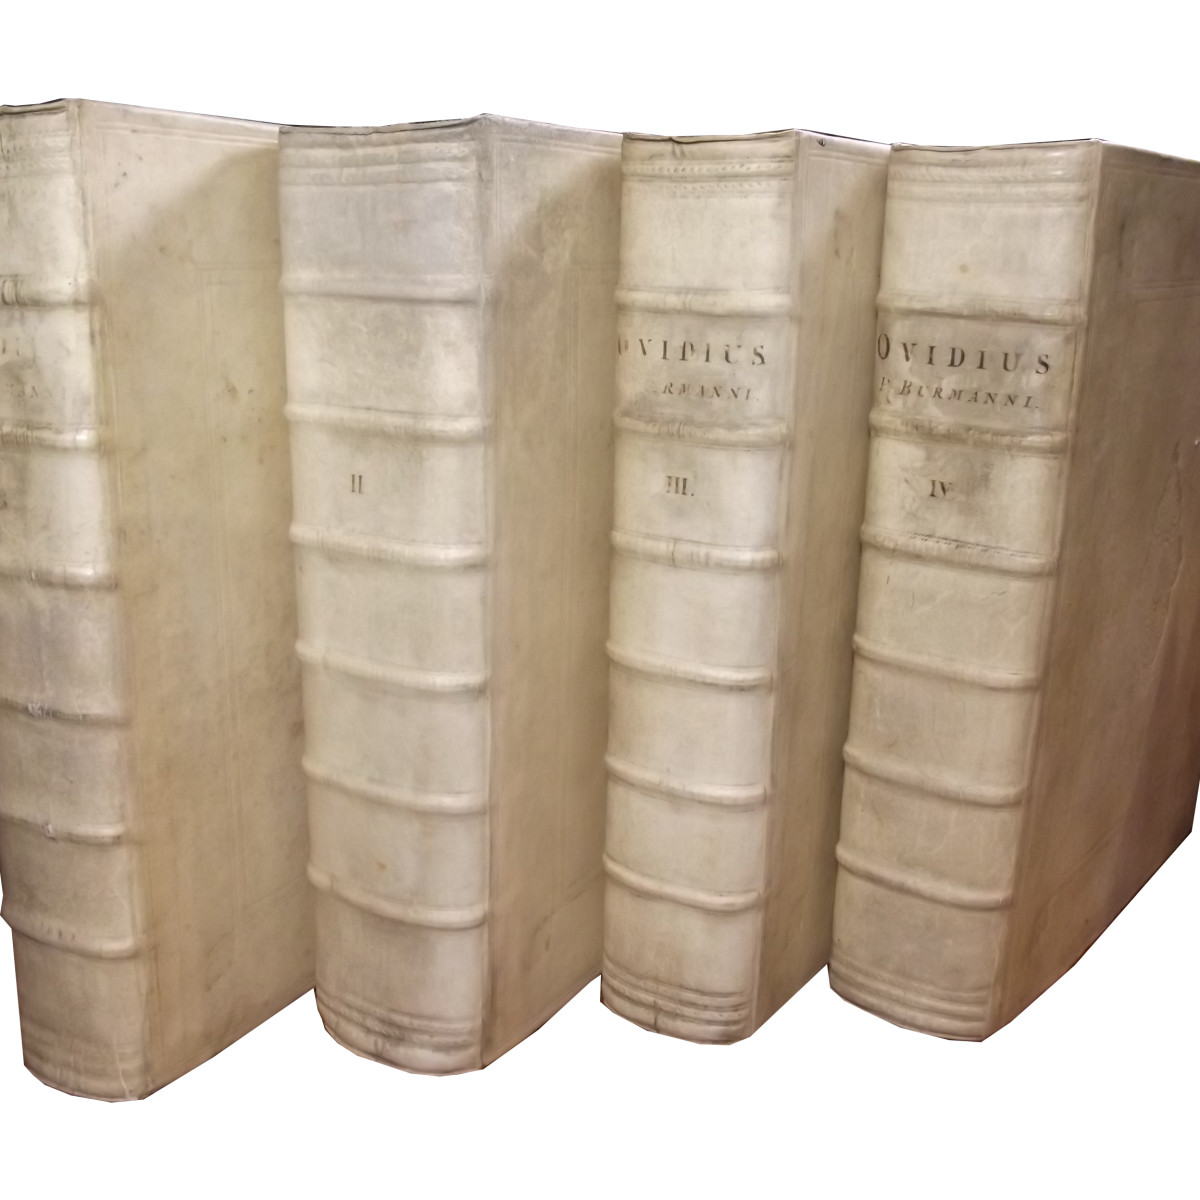 Vellum bound copy of Ovid's Works